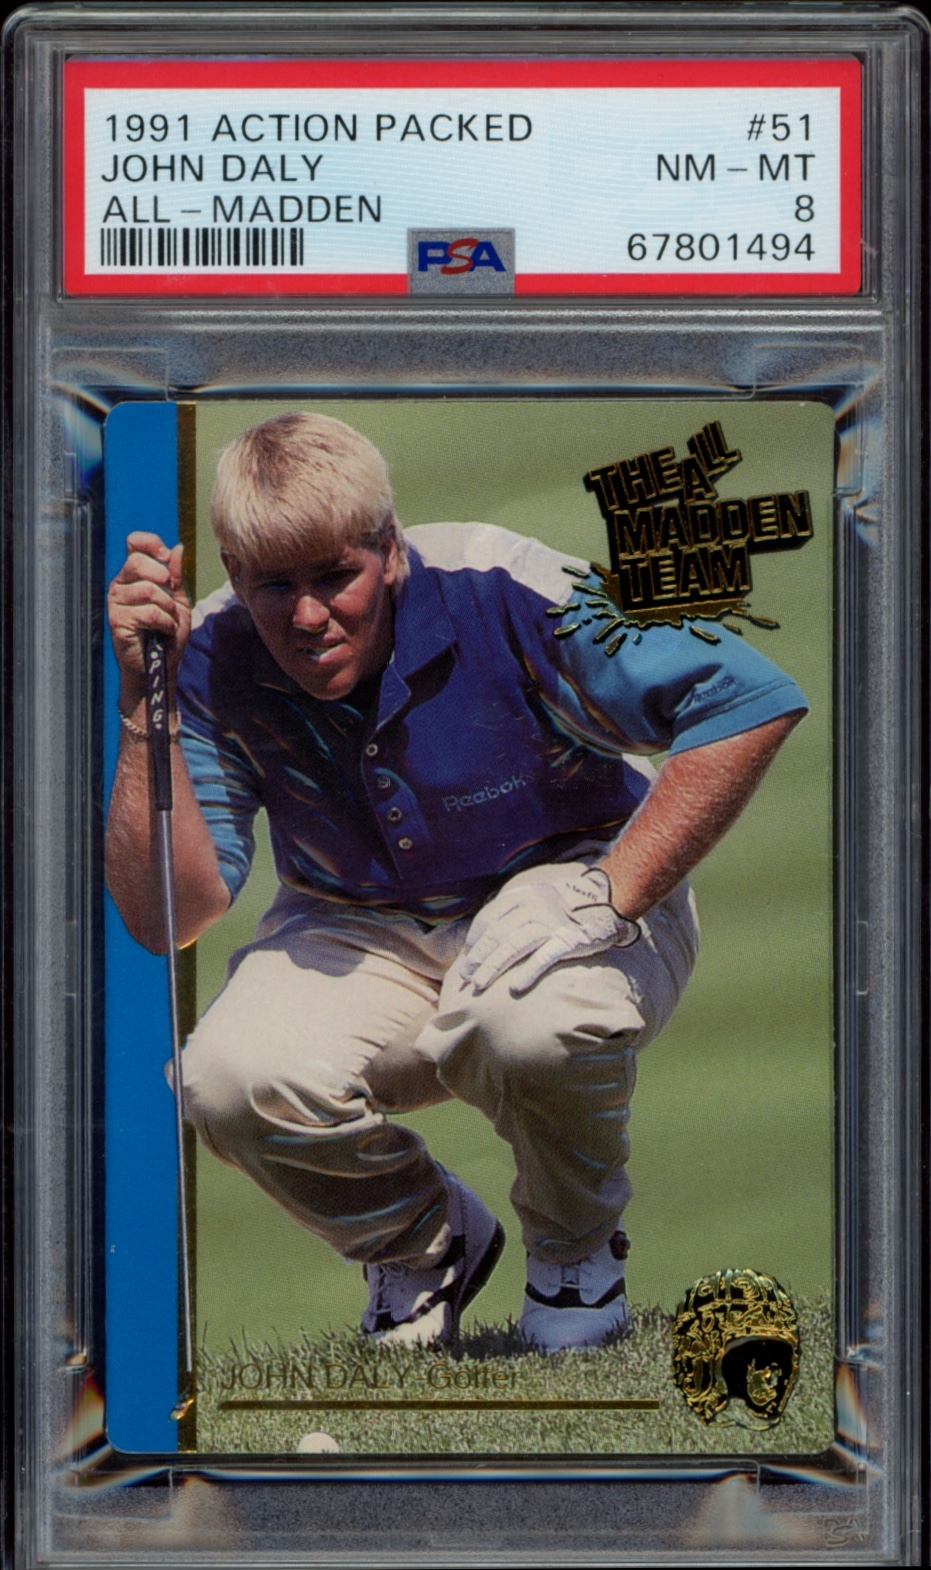 John Dalys 1991 Action Packed Golf Trading Card, graded PSA 8.